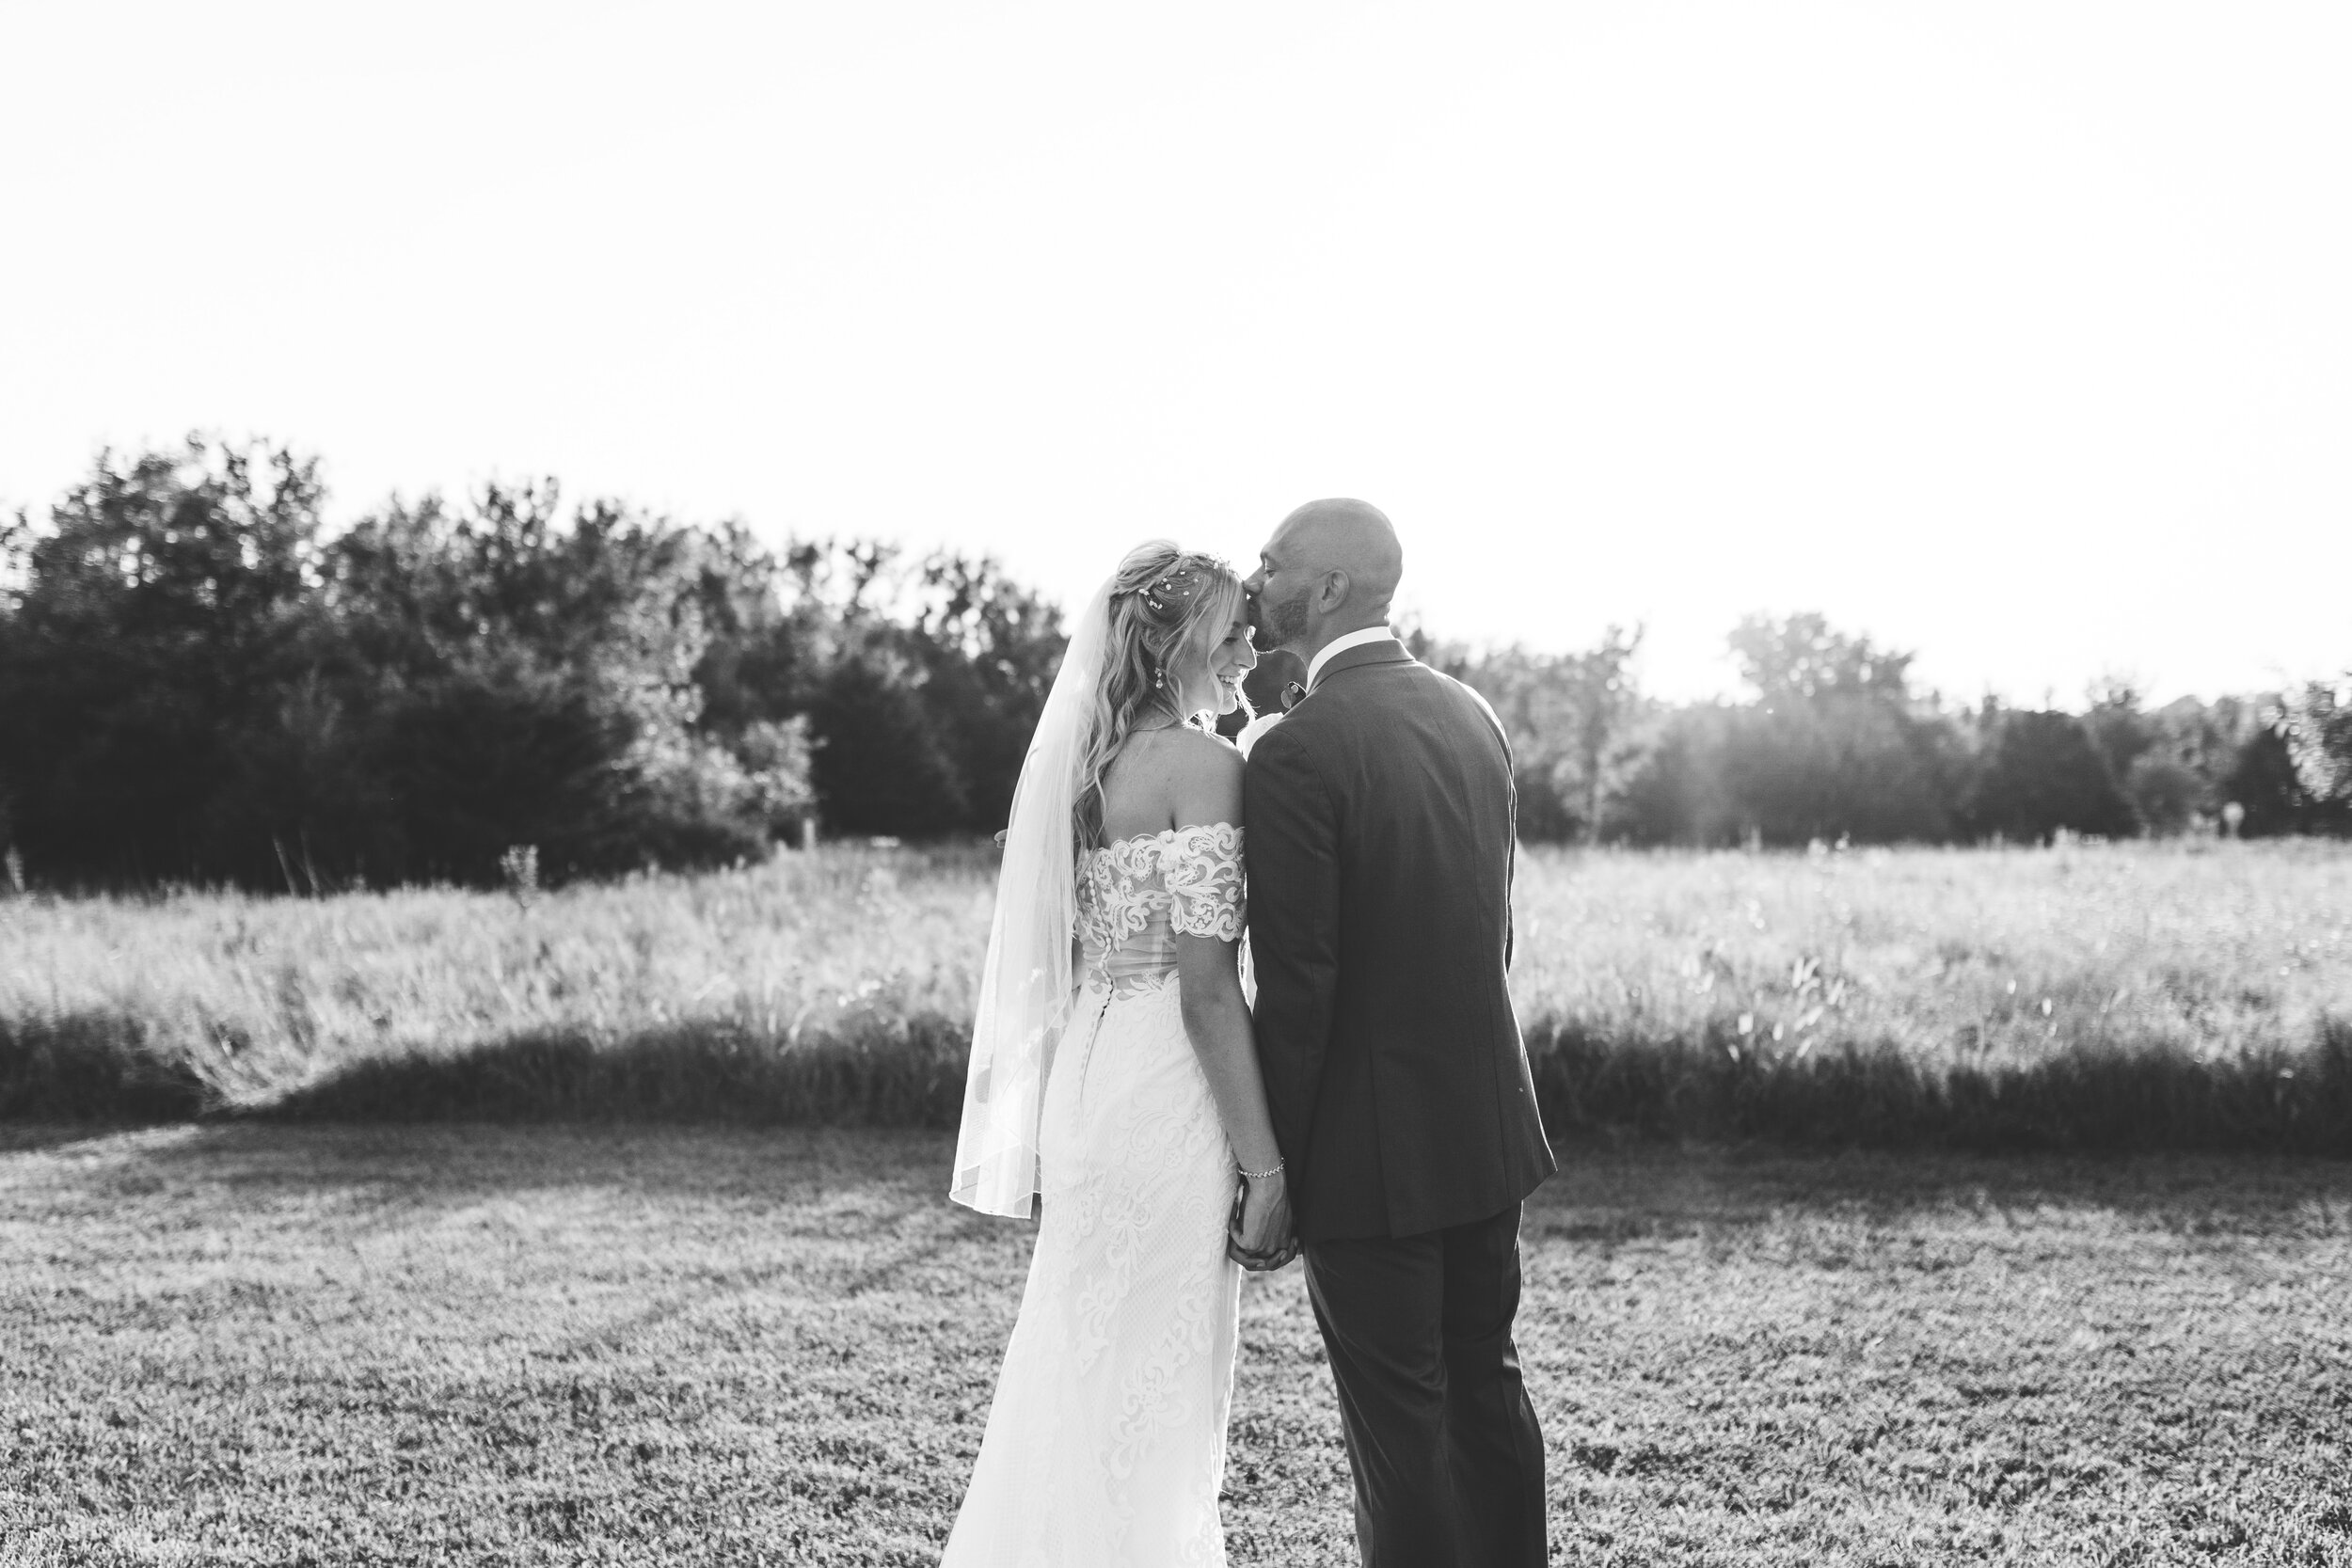 Hayley + Lorenzo - Summer White Chapel Wedding at Stone Hill Barn in Augusta, Kansas177.jpg